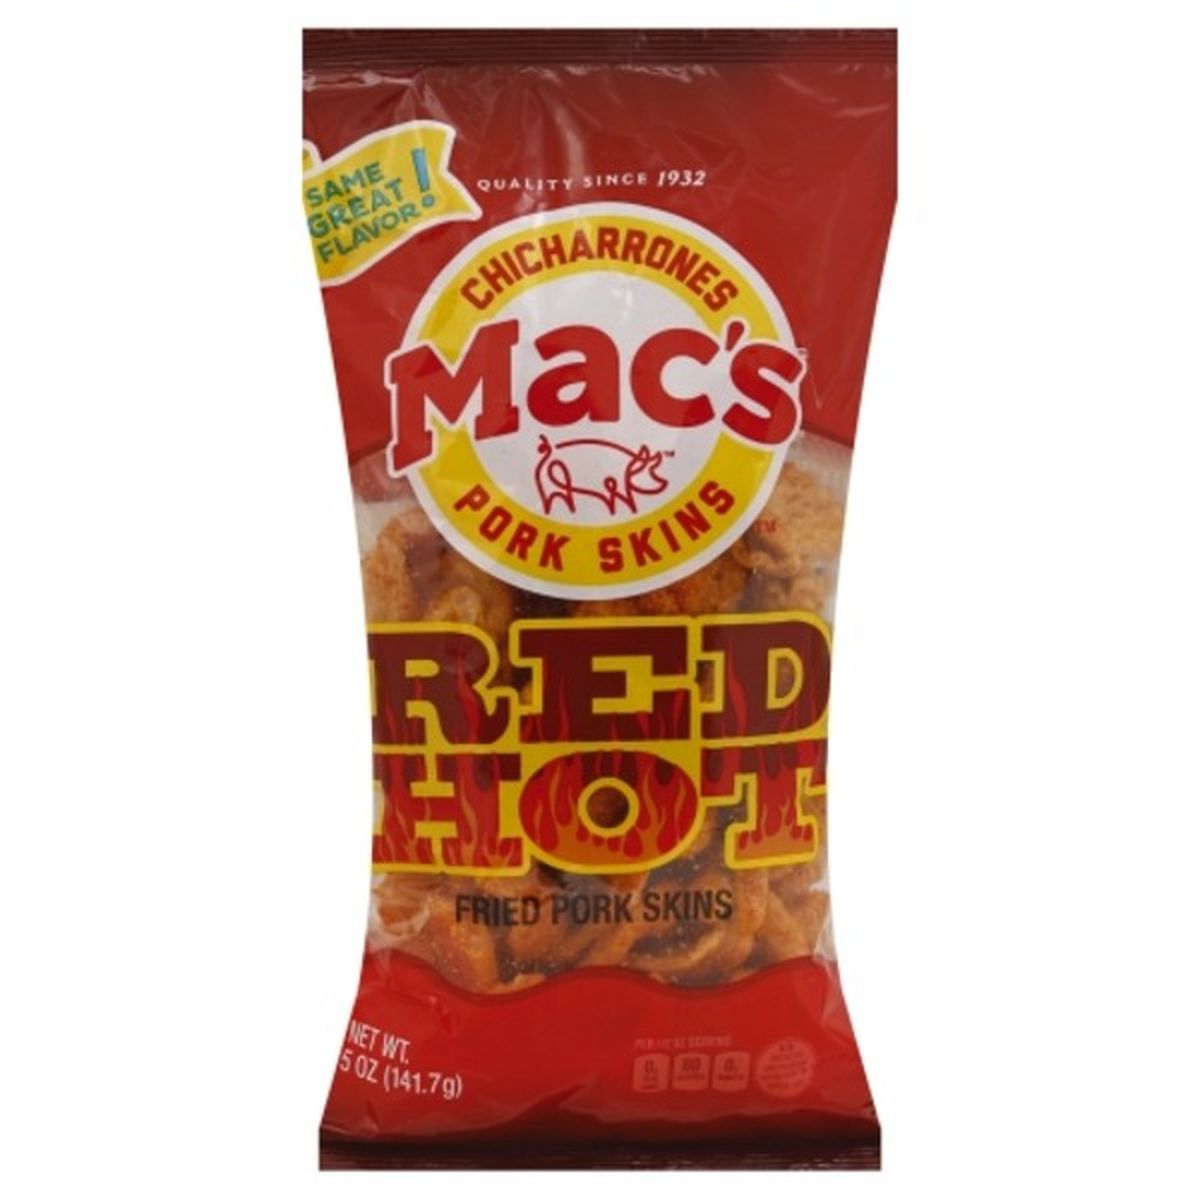 Calories in Macs Pork Skins, Fried, Red Hot